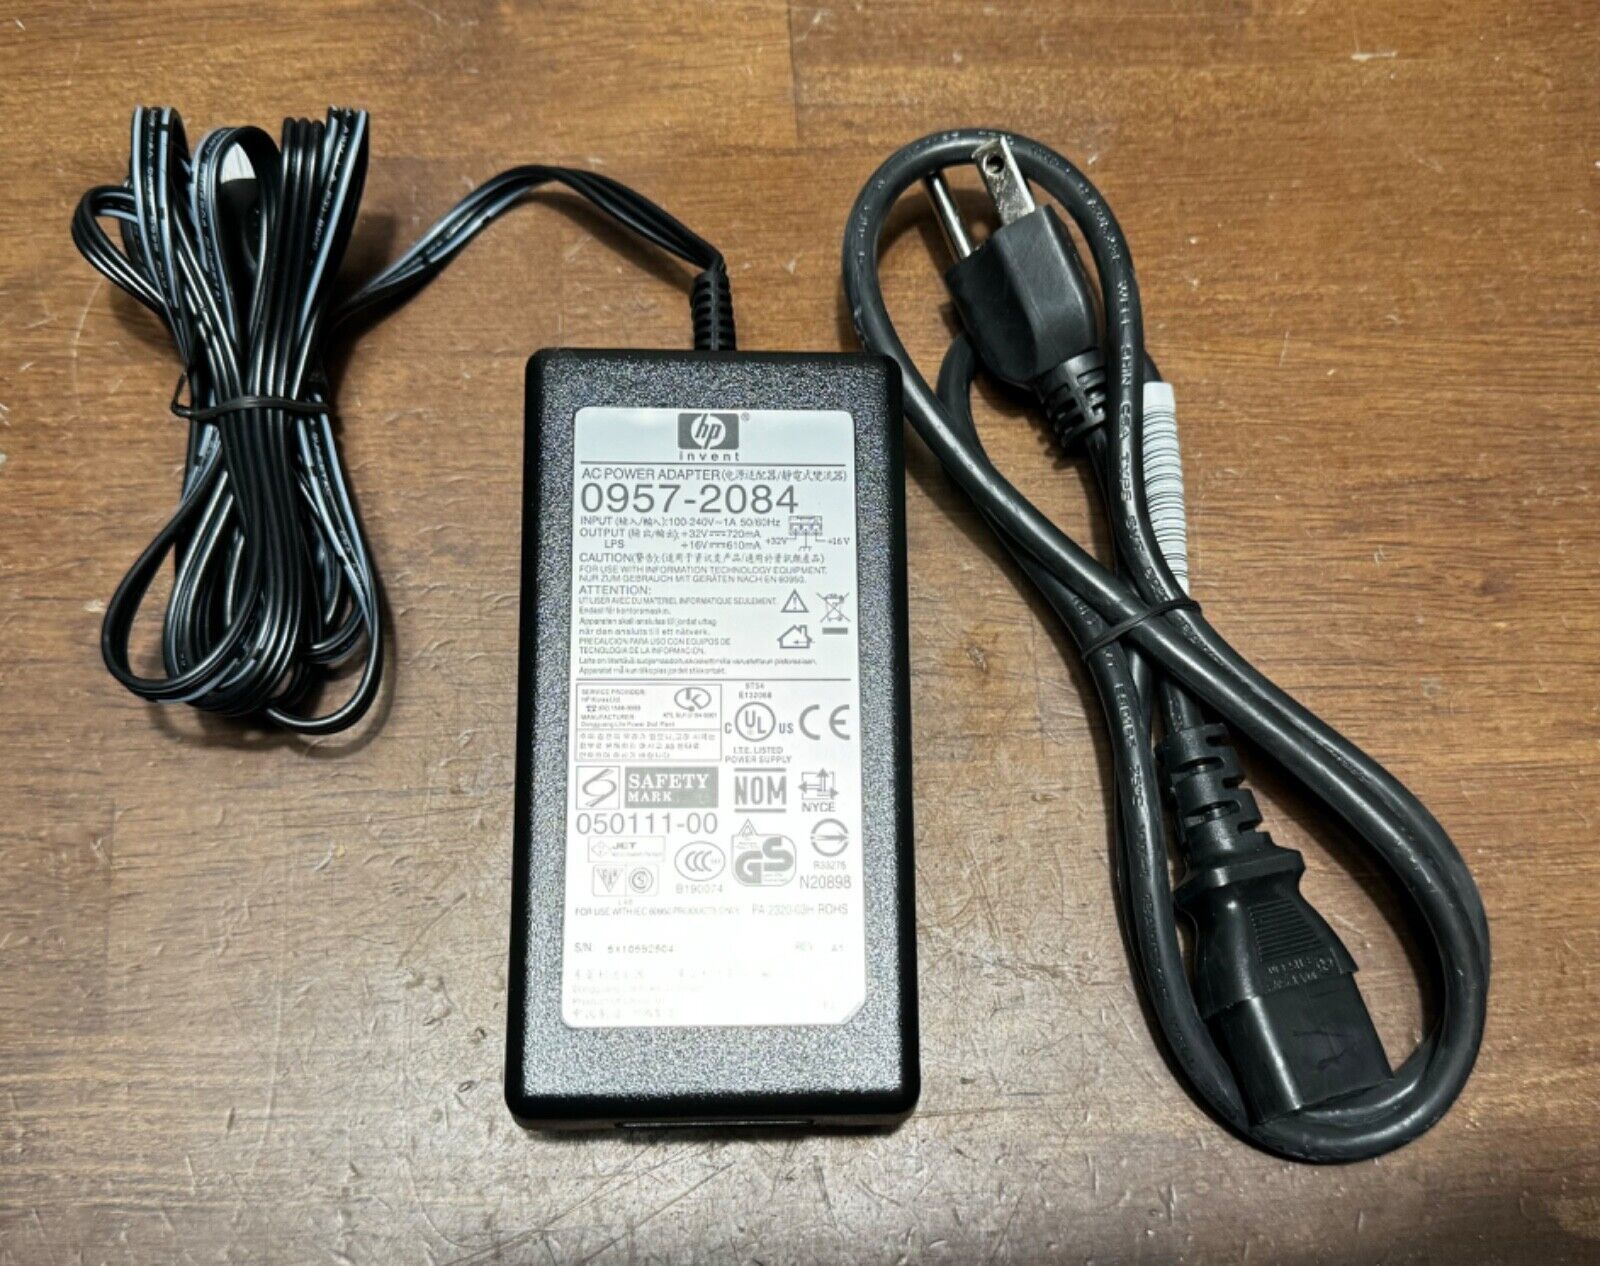 HP 0957-2084 Power Supply Cord AC Adapter Deskjet Photosmart Printer NOS - $10.00